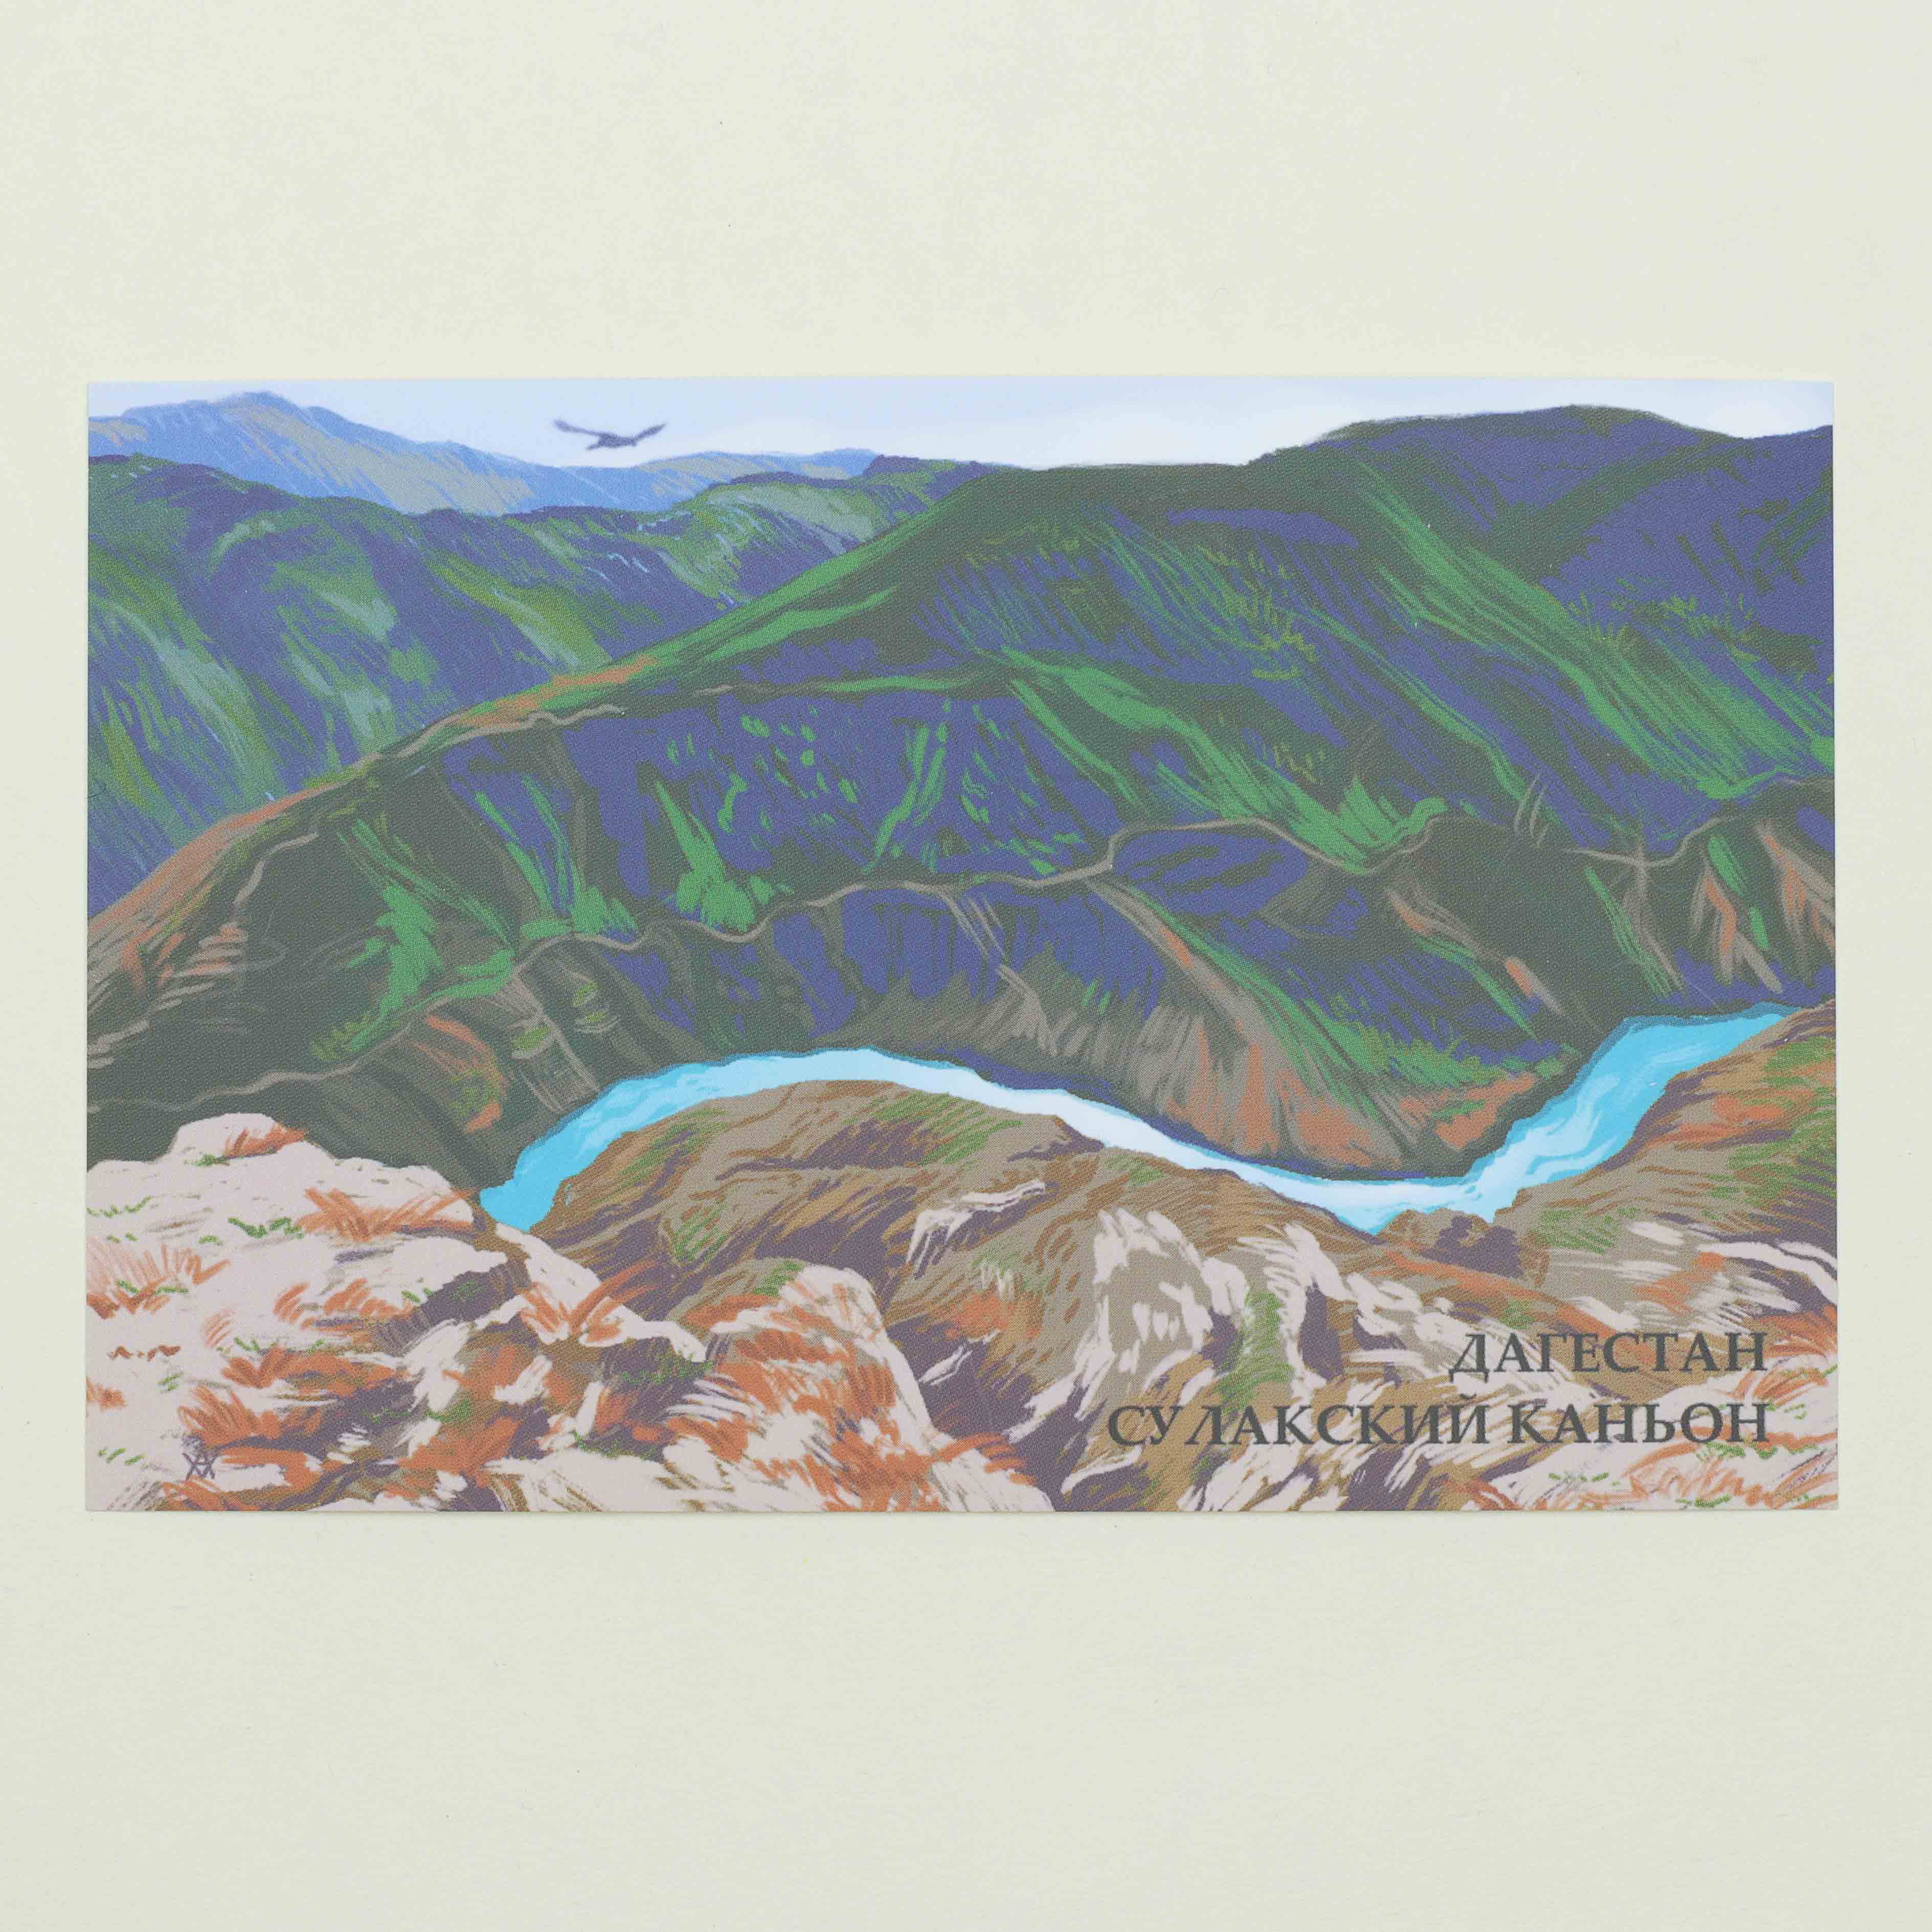 Сулакский каньон рисунок карандашом